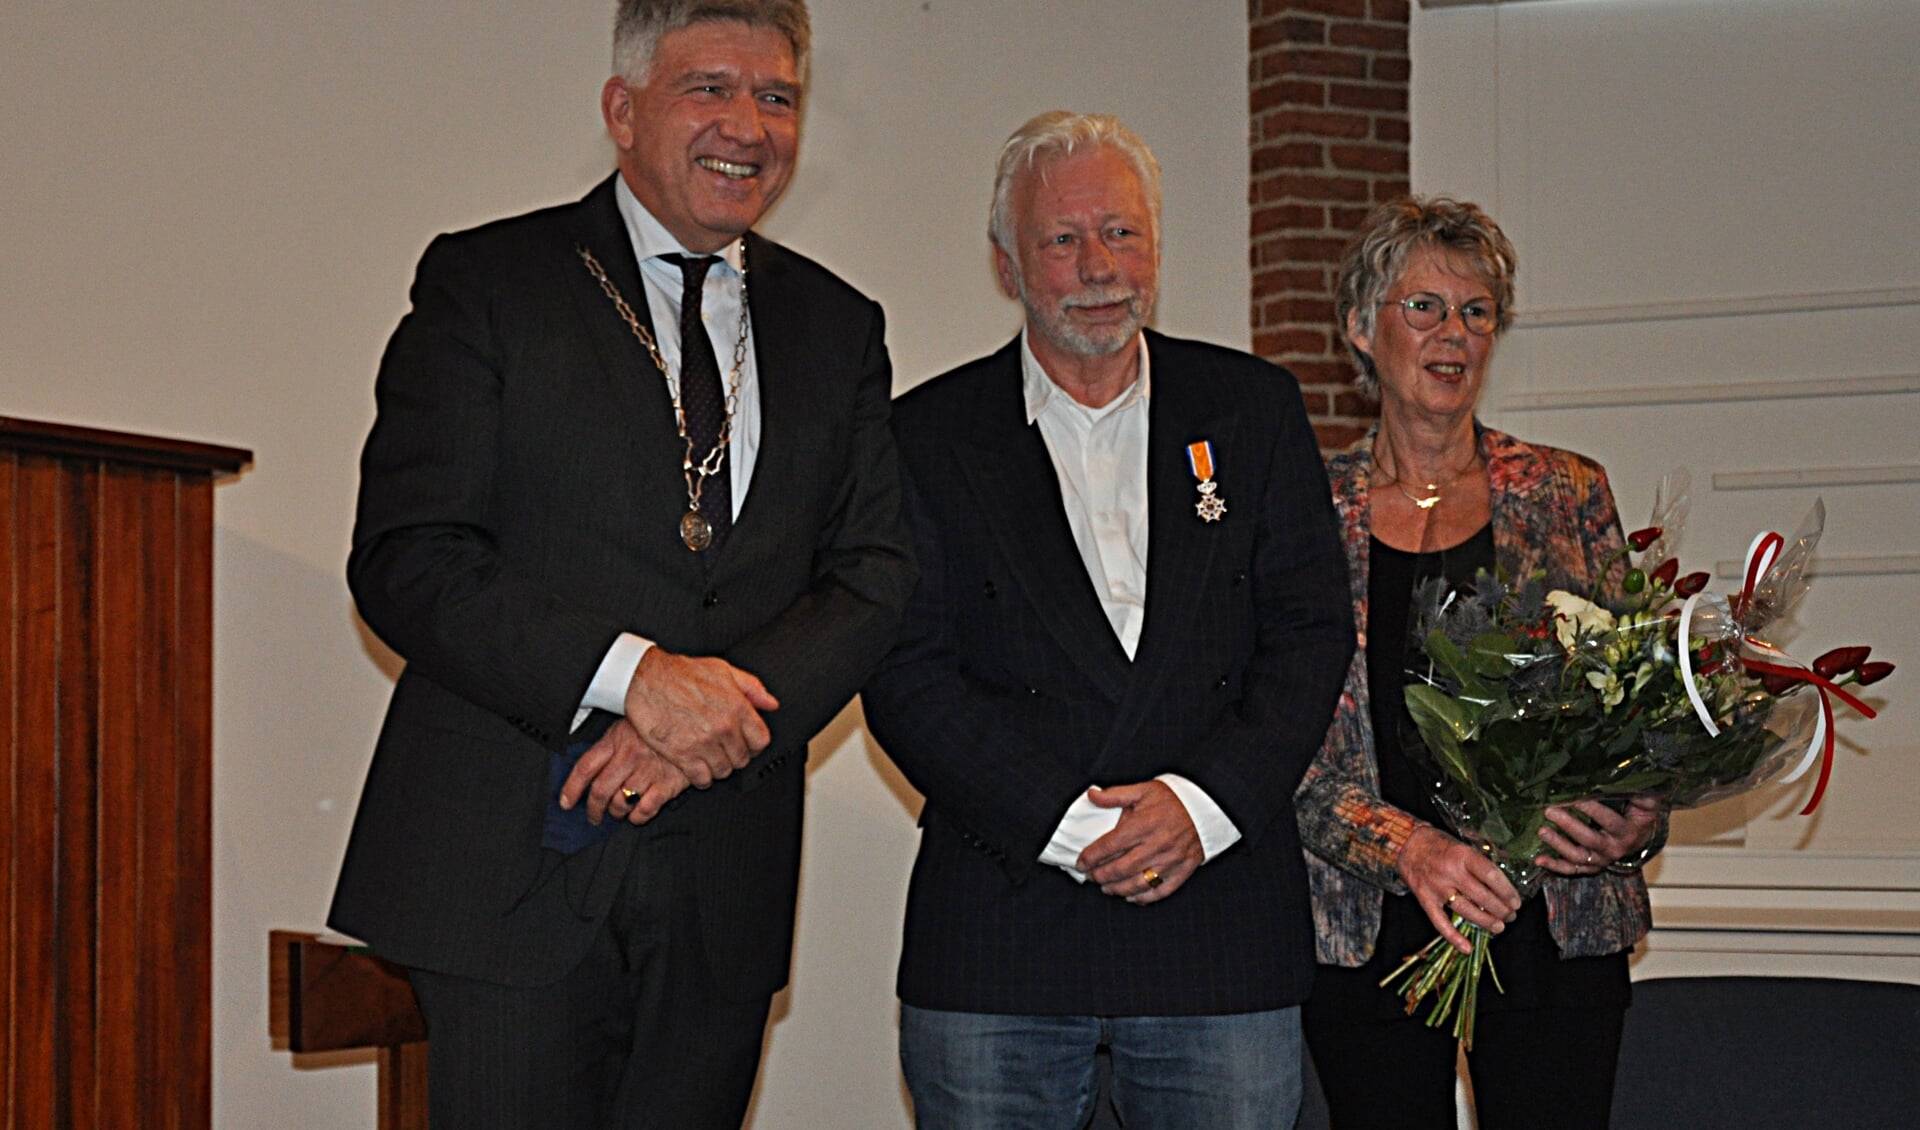 vlnr: burgemeester Jaeger, Teke en Wil Lanting Lanting met zijn echtgenote Wil Lanting